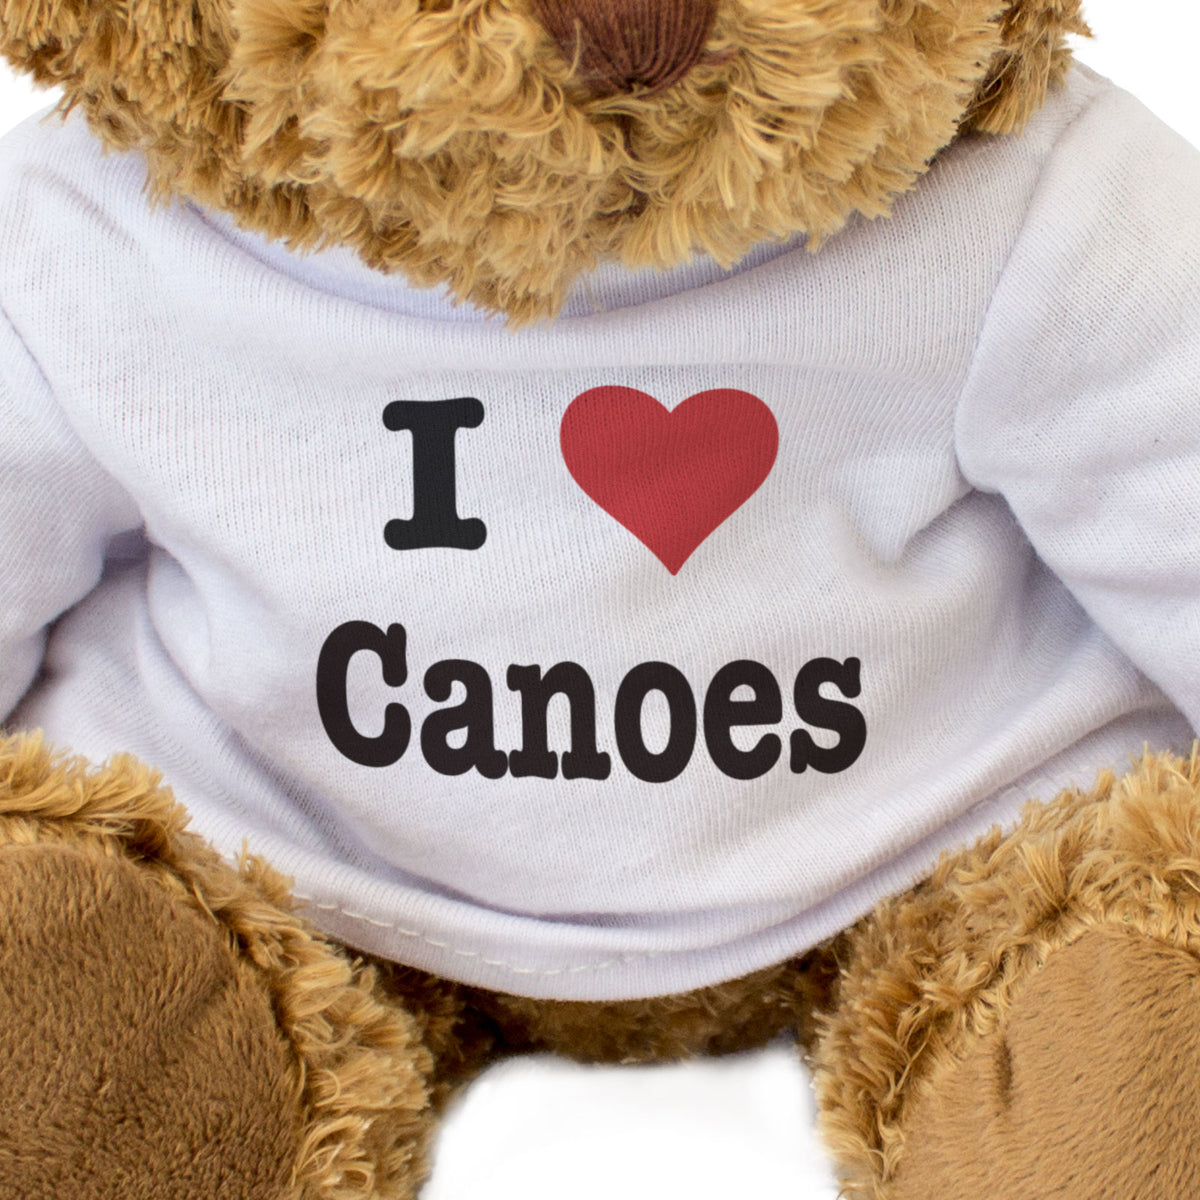 I Love Canoes - Teddy Bear